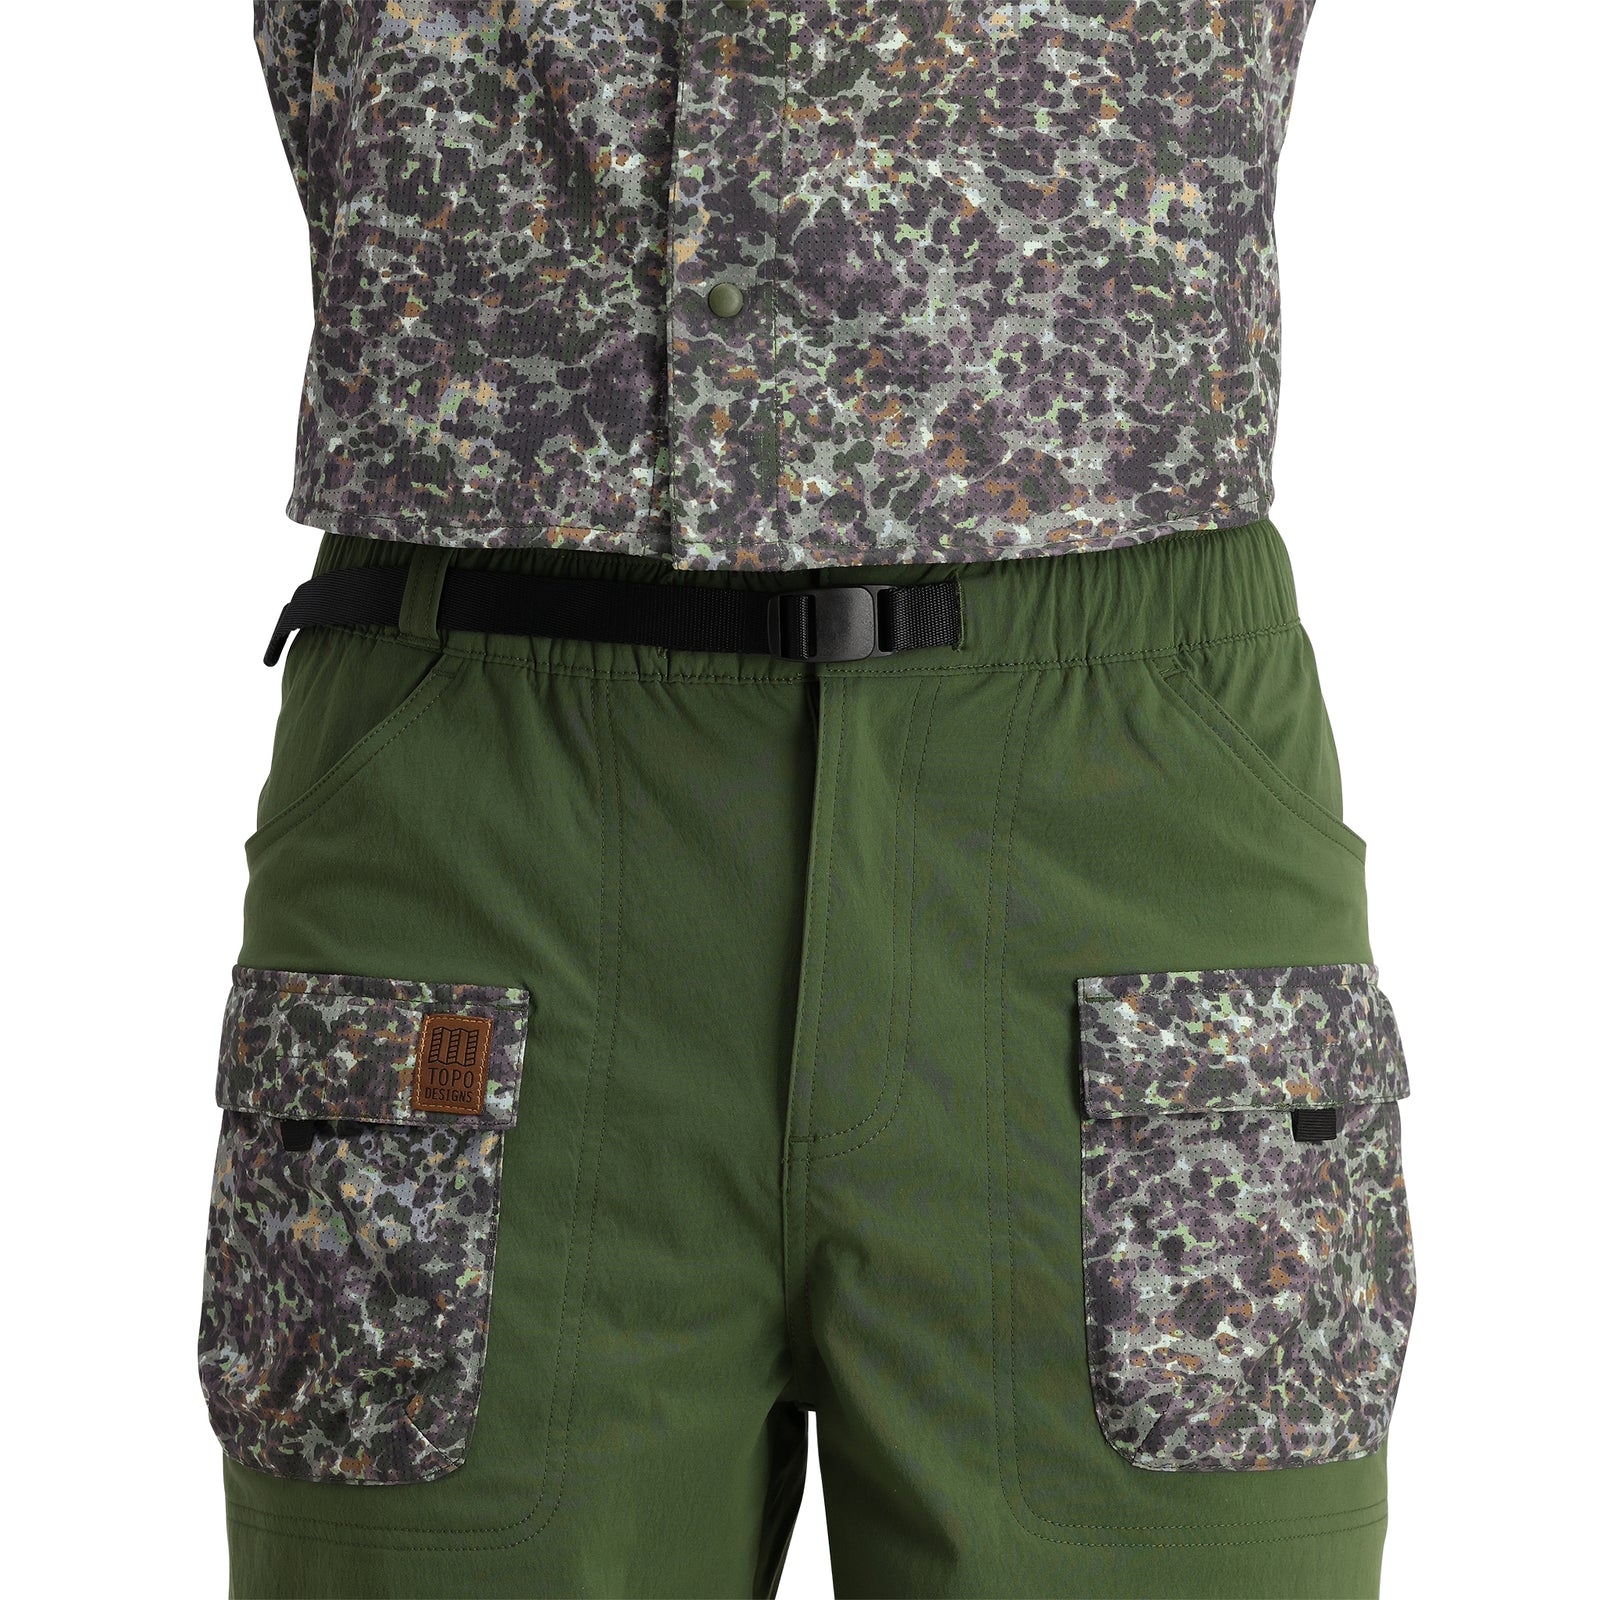 Detail shot of Topo Designs Retro River Shorts - Men's in "Olive / Olive Meteor"